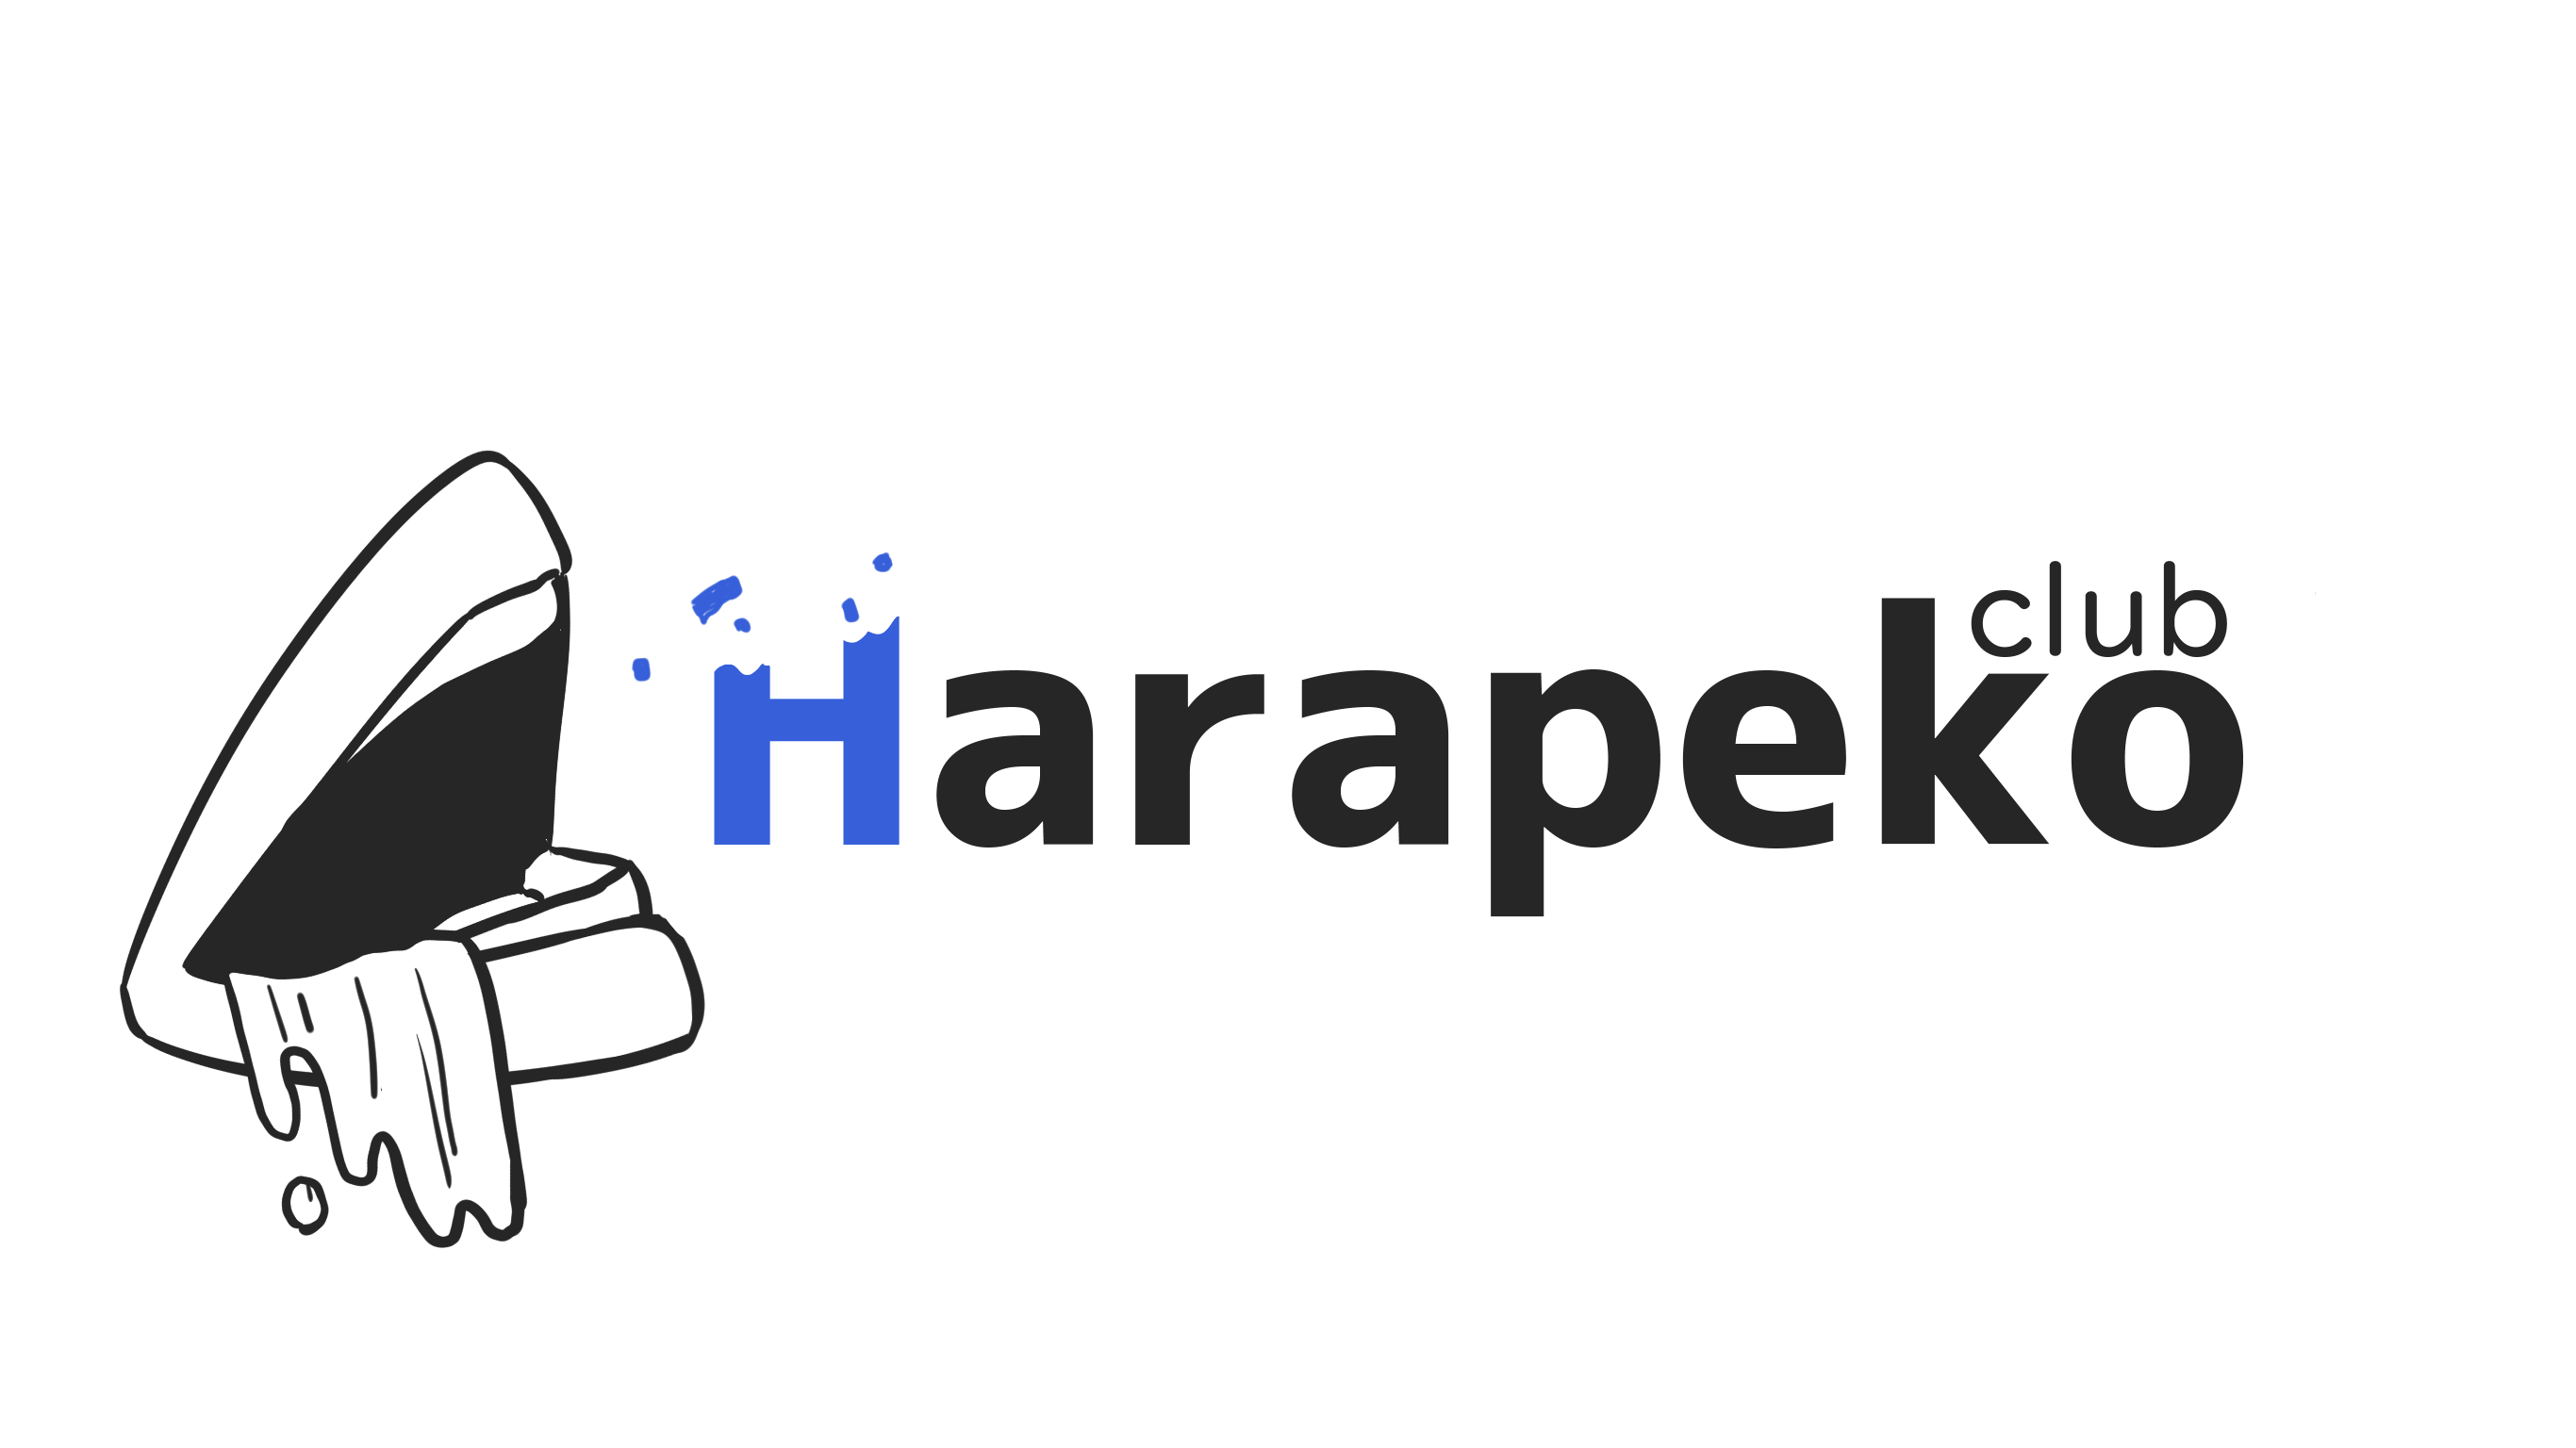 HaraPeko部